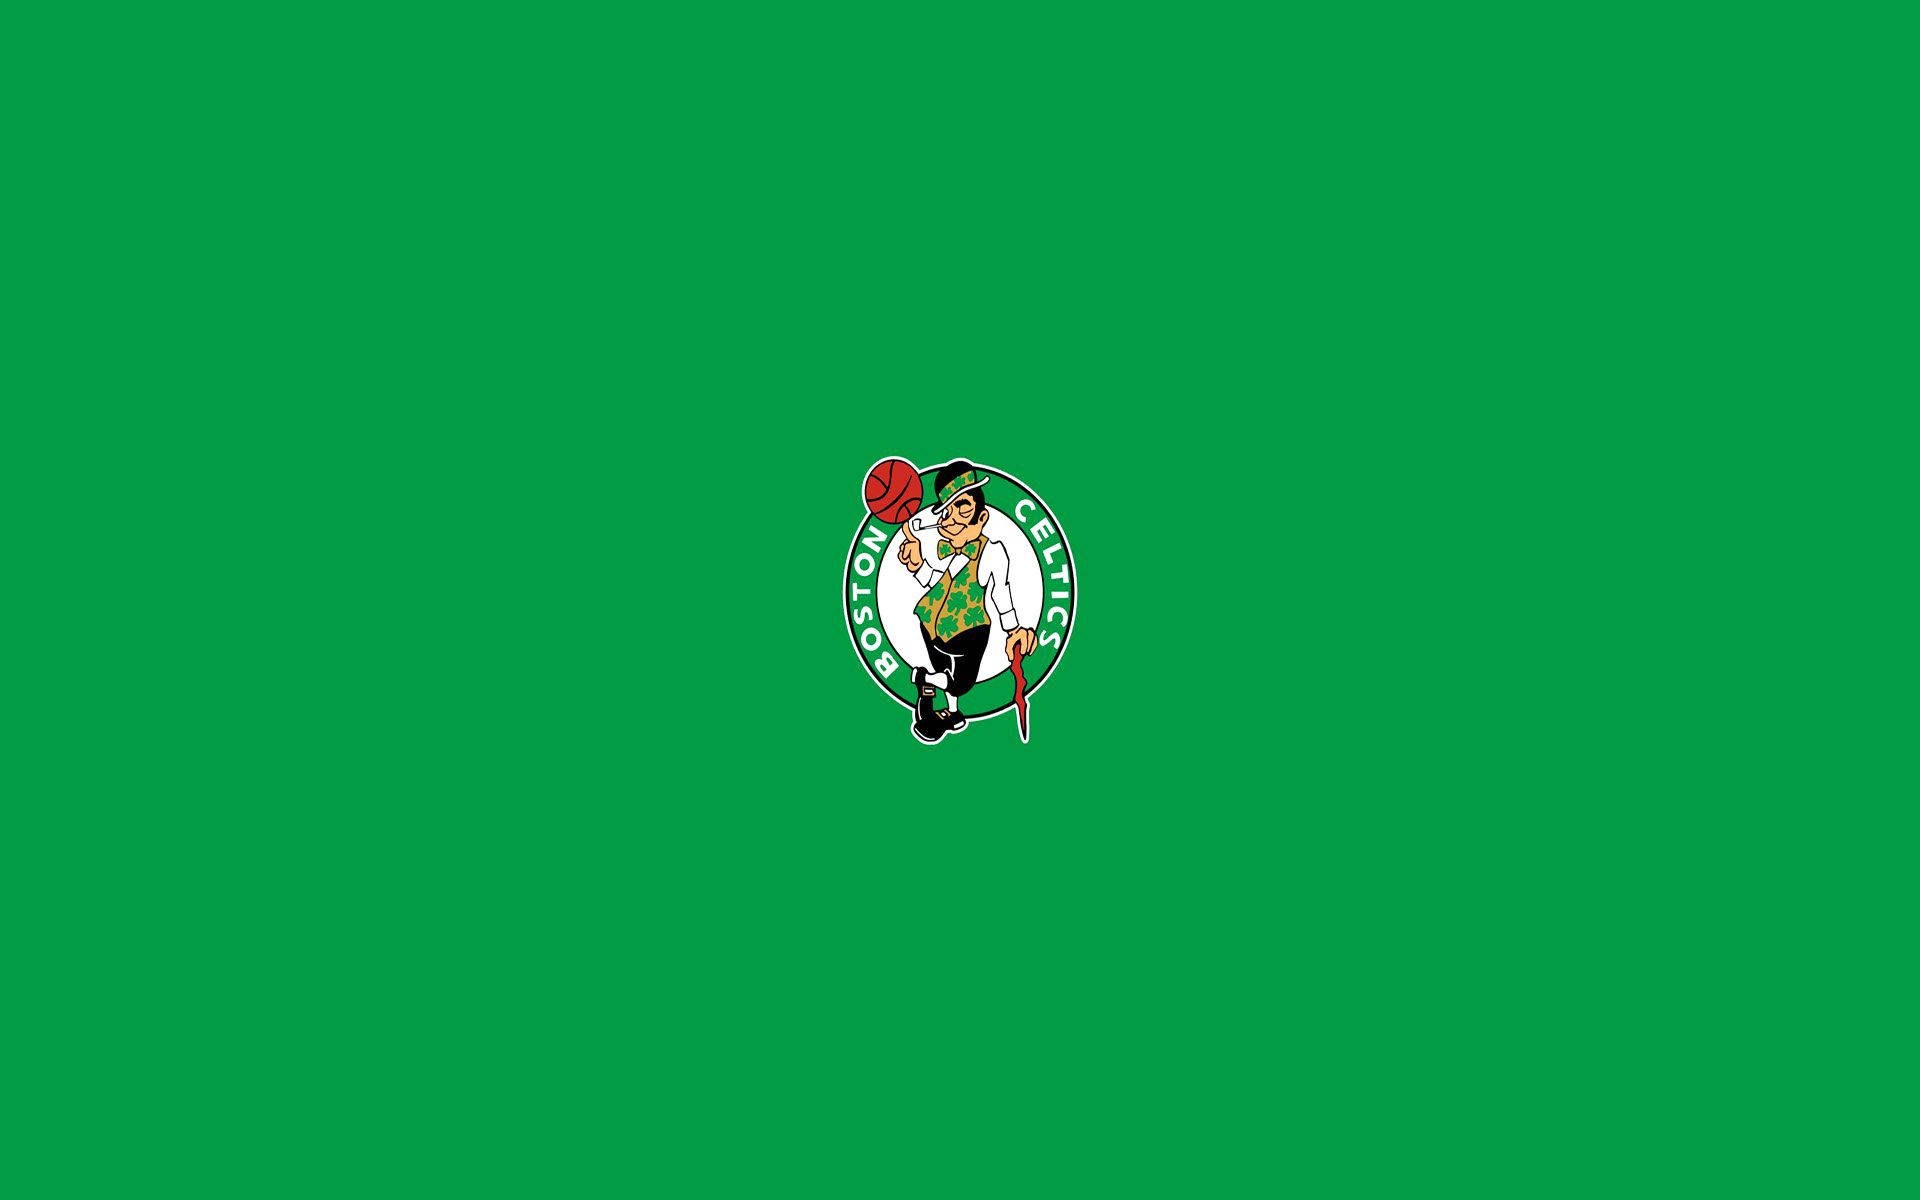 Boston Celtics In Plain Green Background